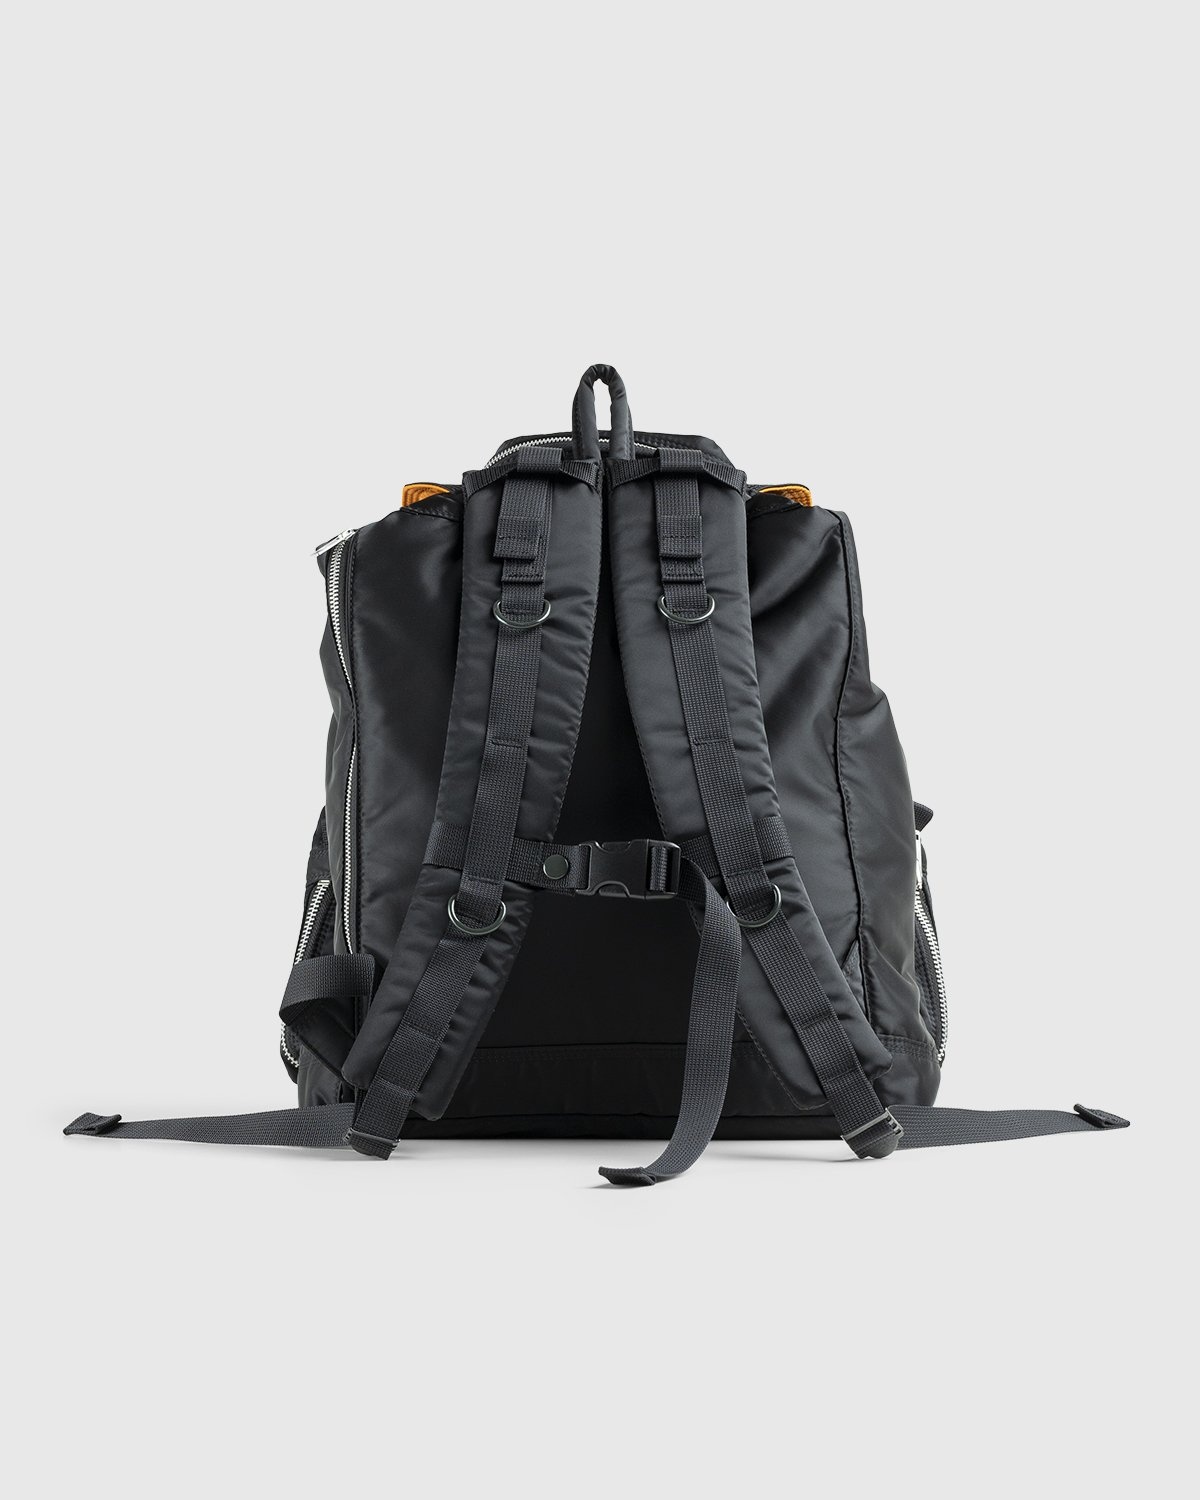 Porter-Yoshida & Co. – Rucksack Black - Bags - Black - Image 2